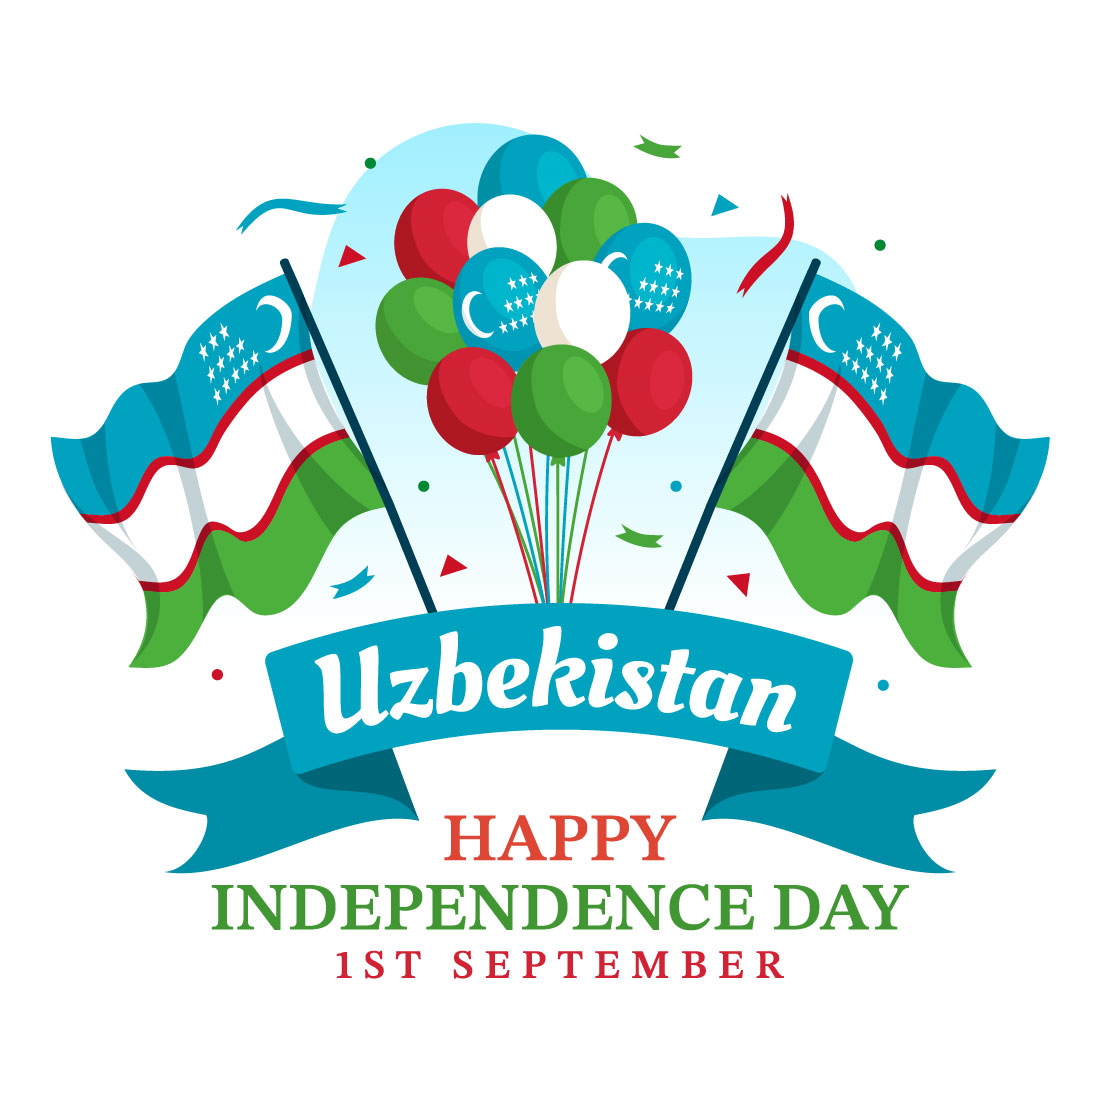 15 Uzbekistan Independence Day Illustration preview image.